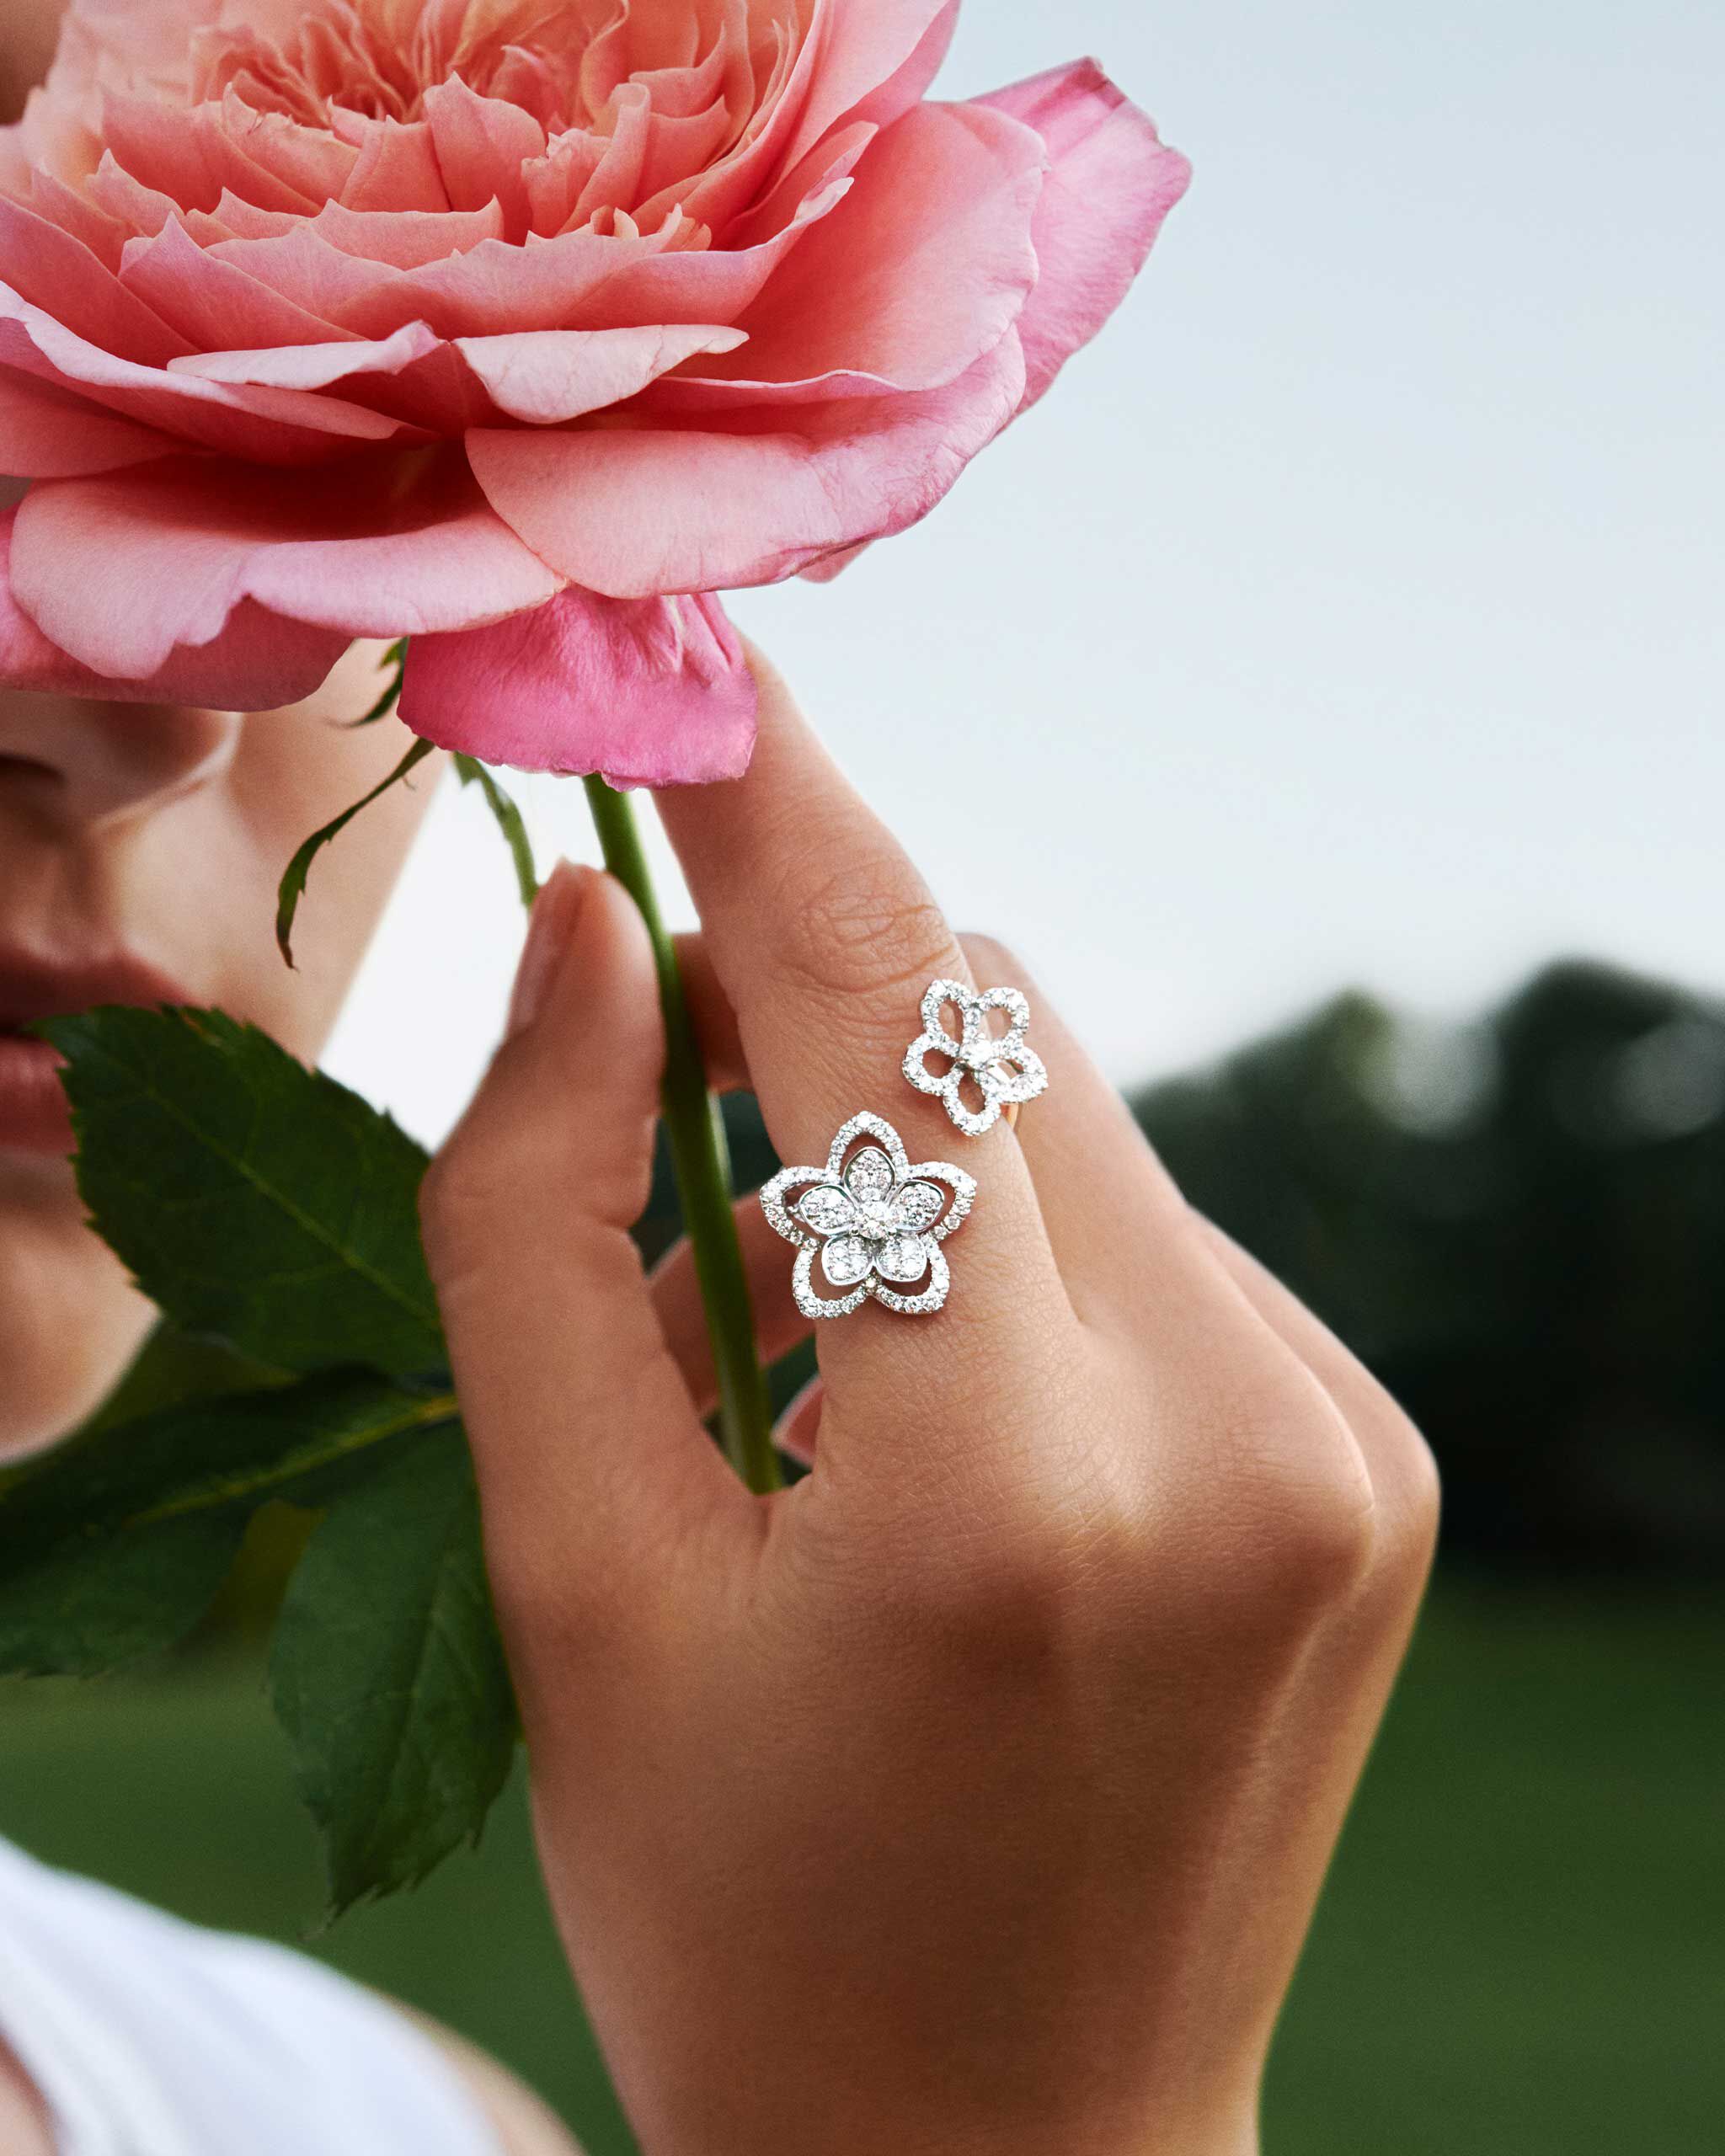 Model's hand shown wearing Graff Wild Flower diamond ring